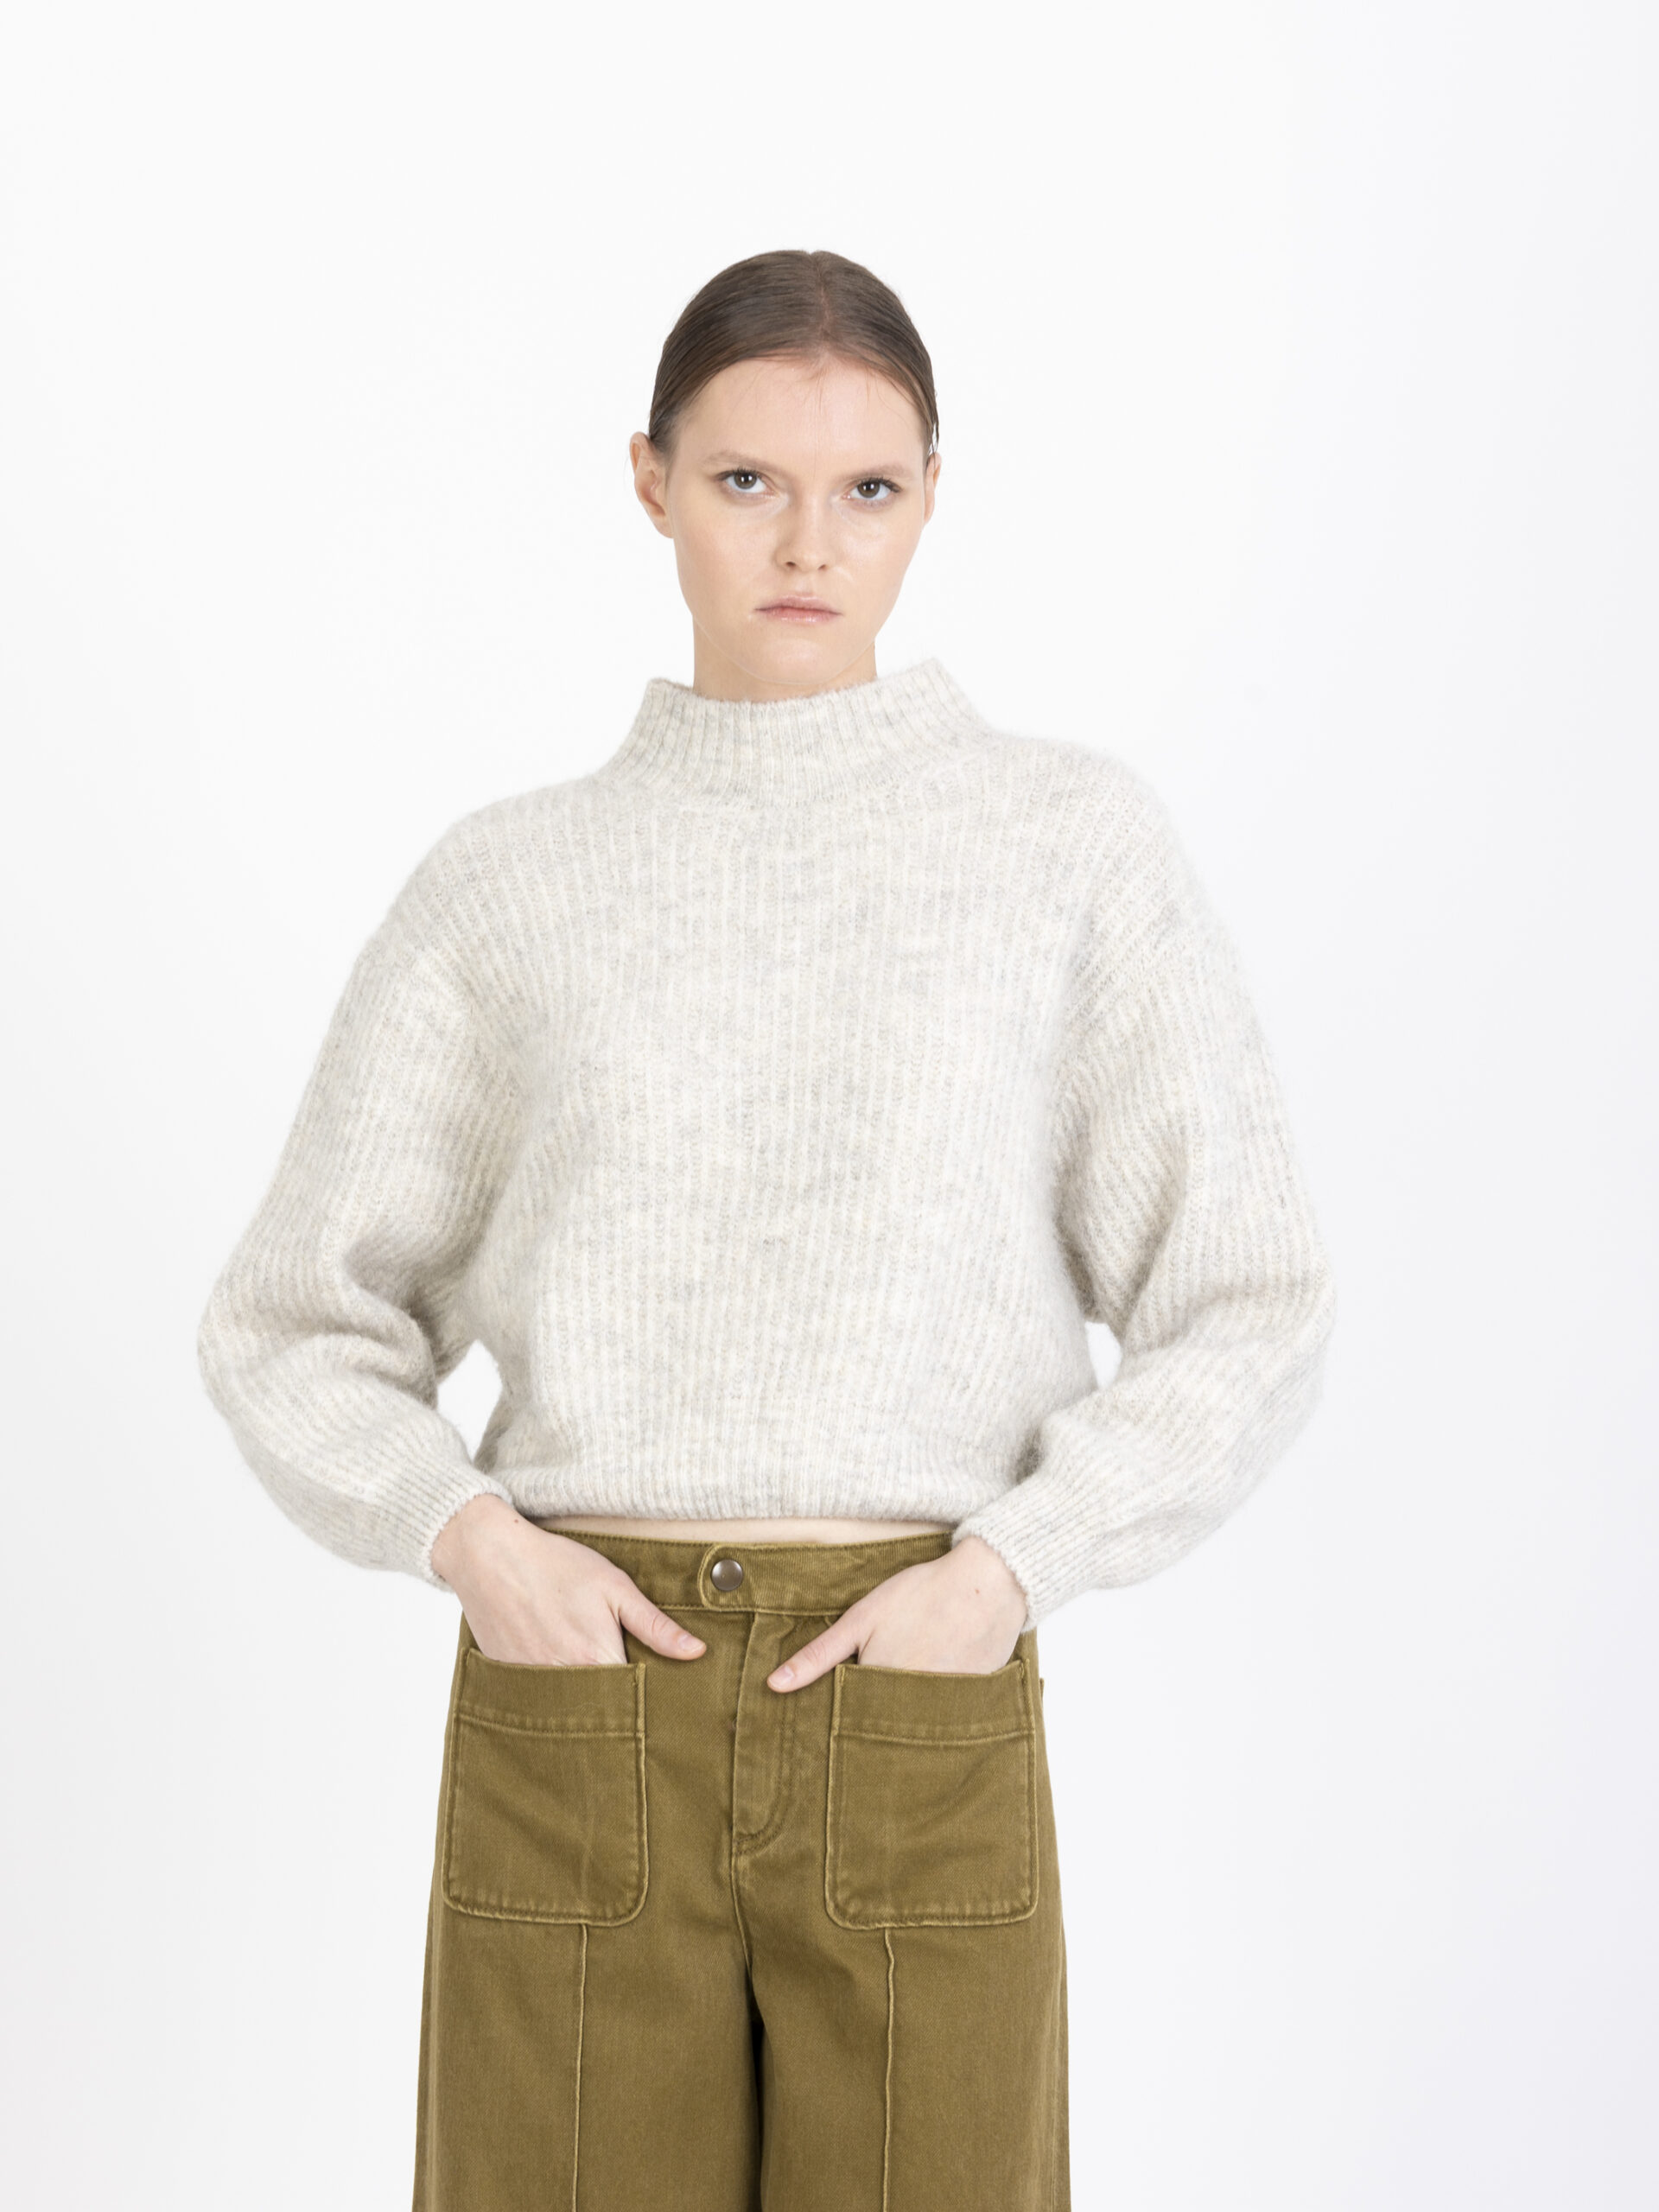 east-grey-wool-sweater-soft-american-vintage-matchboxathens